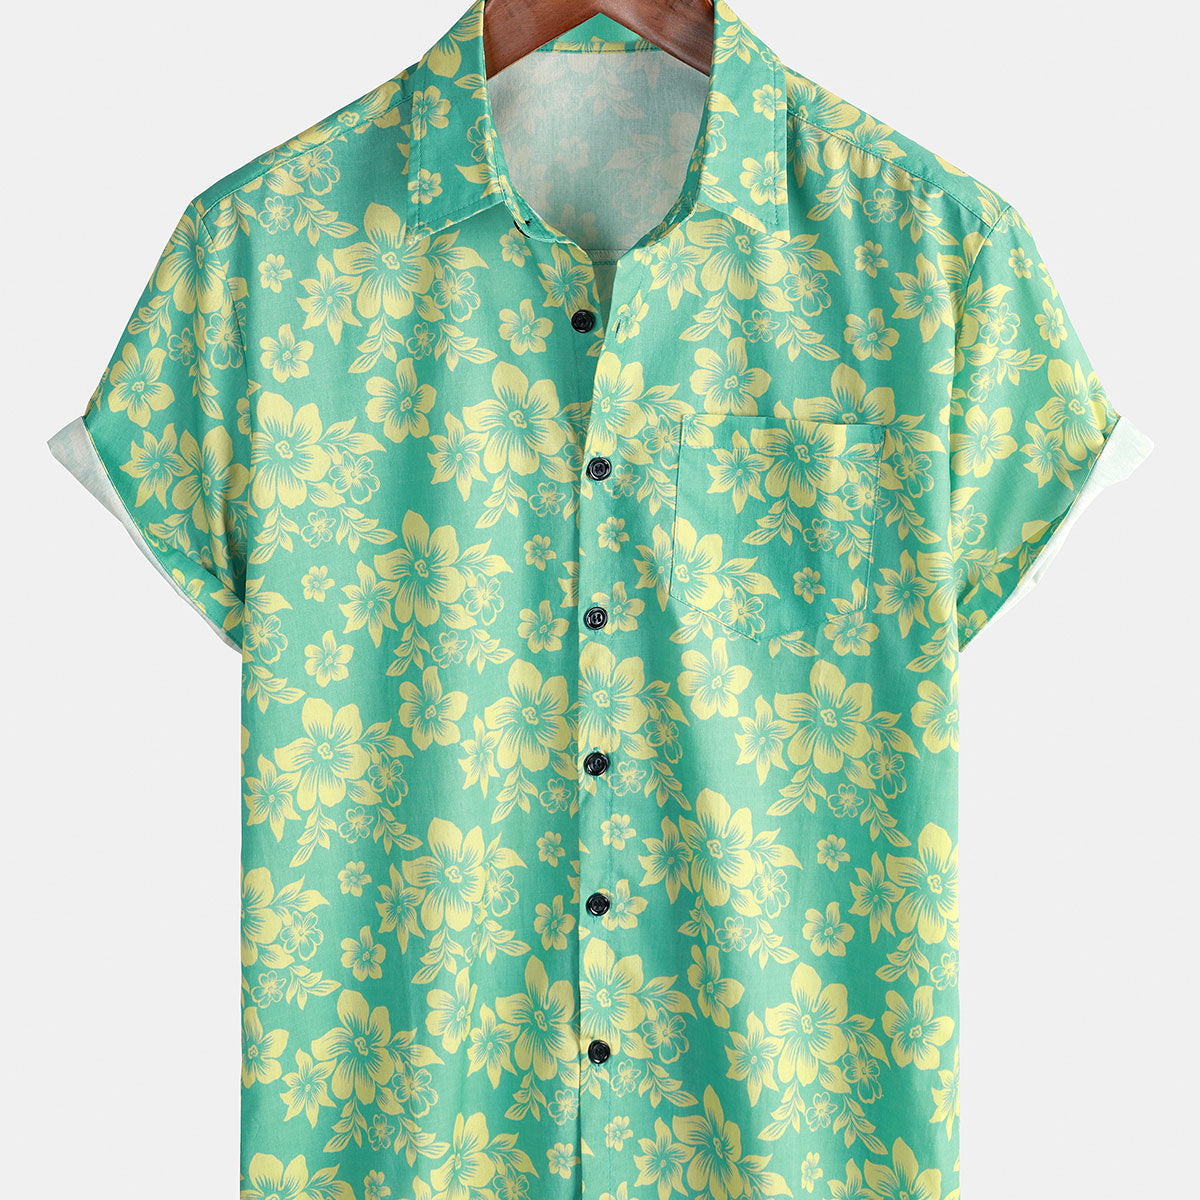 Men's Cotton Floral Holiday Beach Short Sleeve Hawaiian Shirt